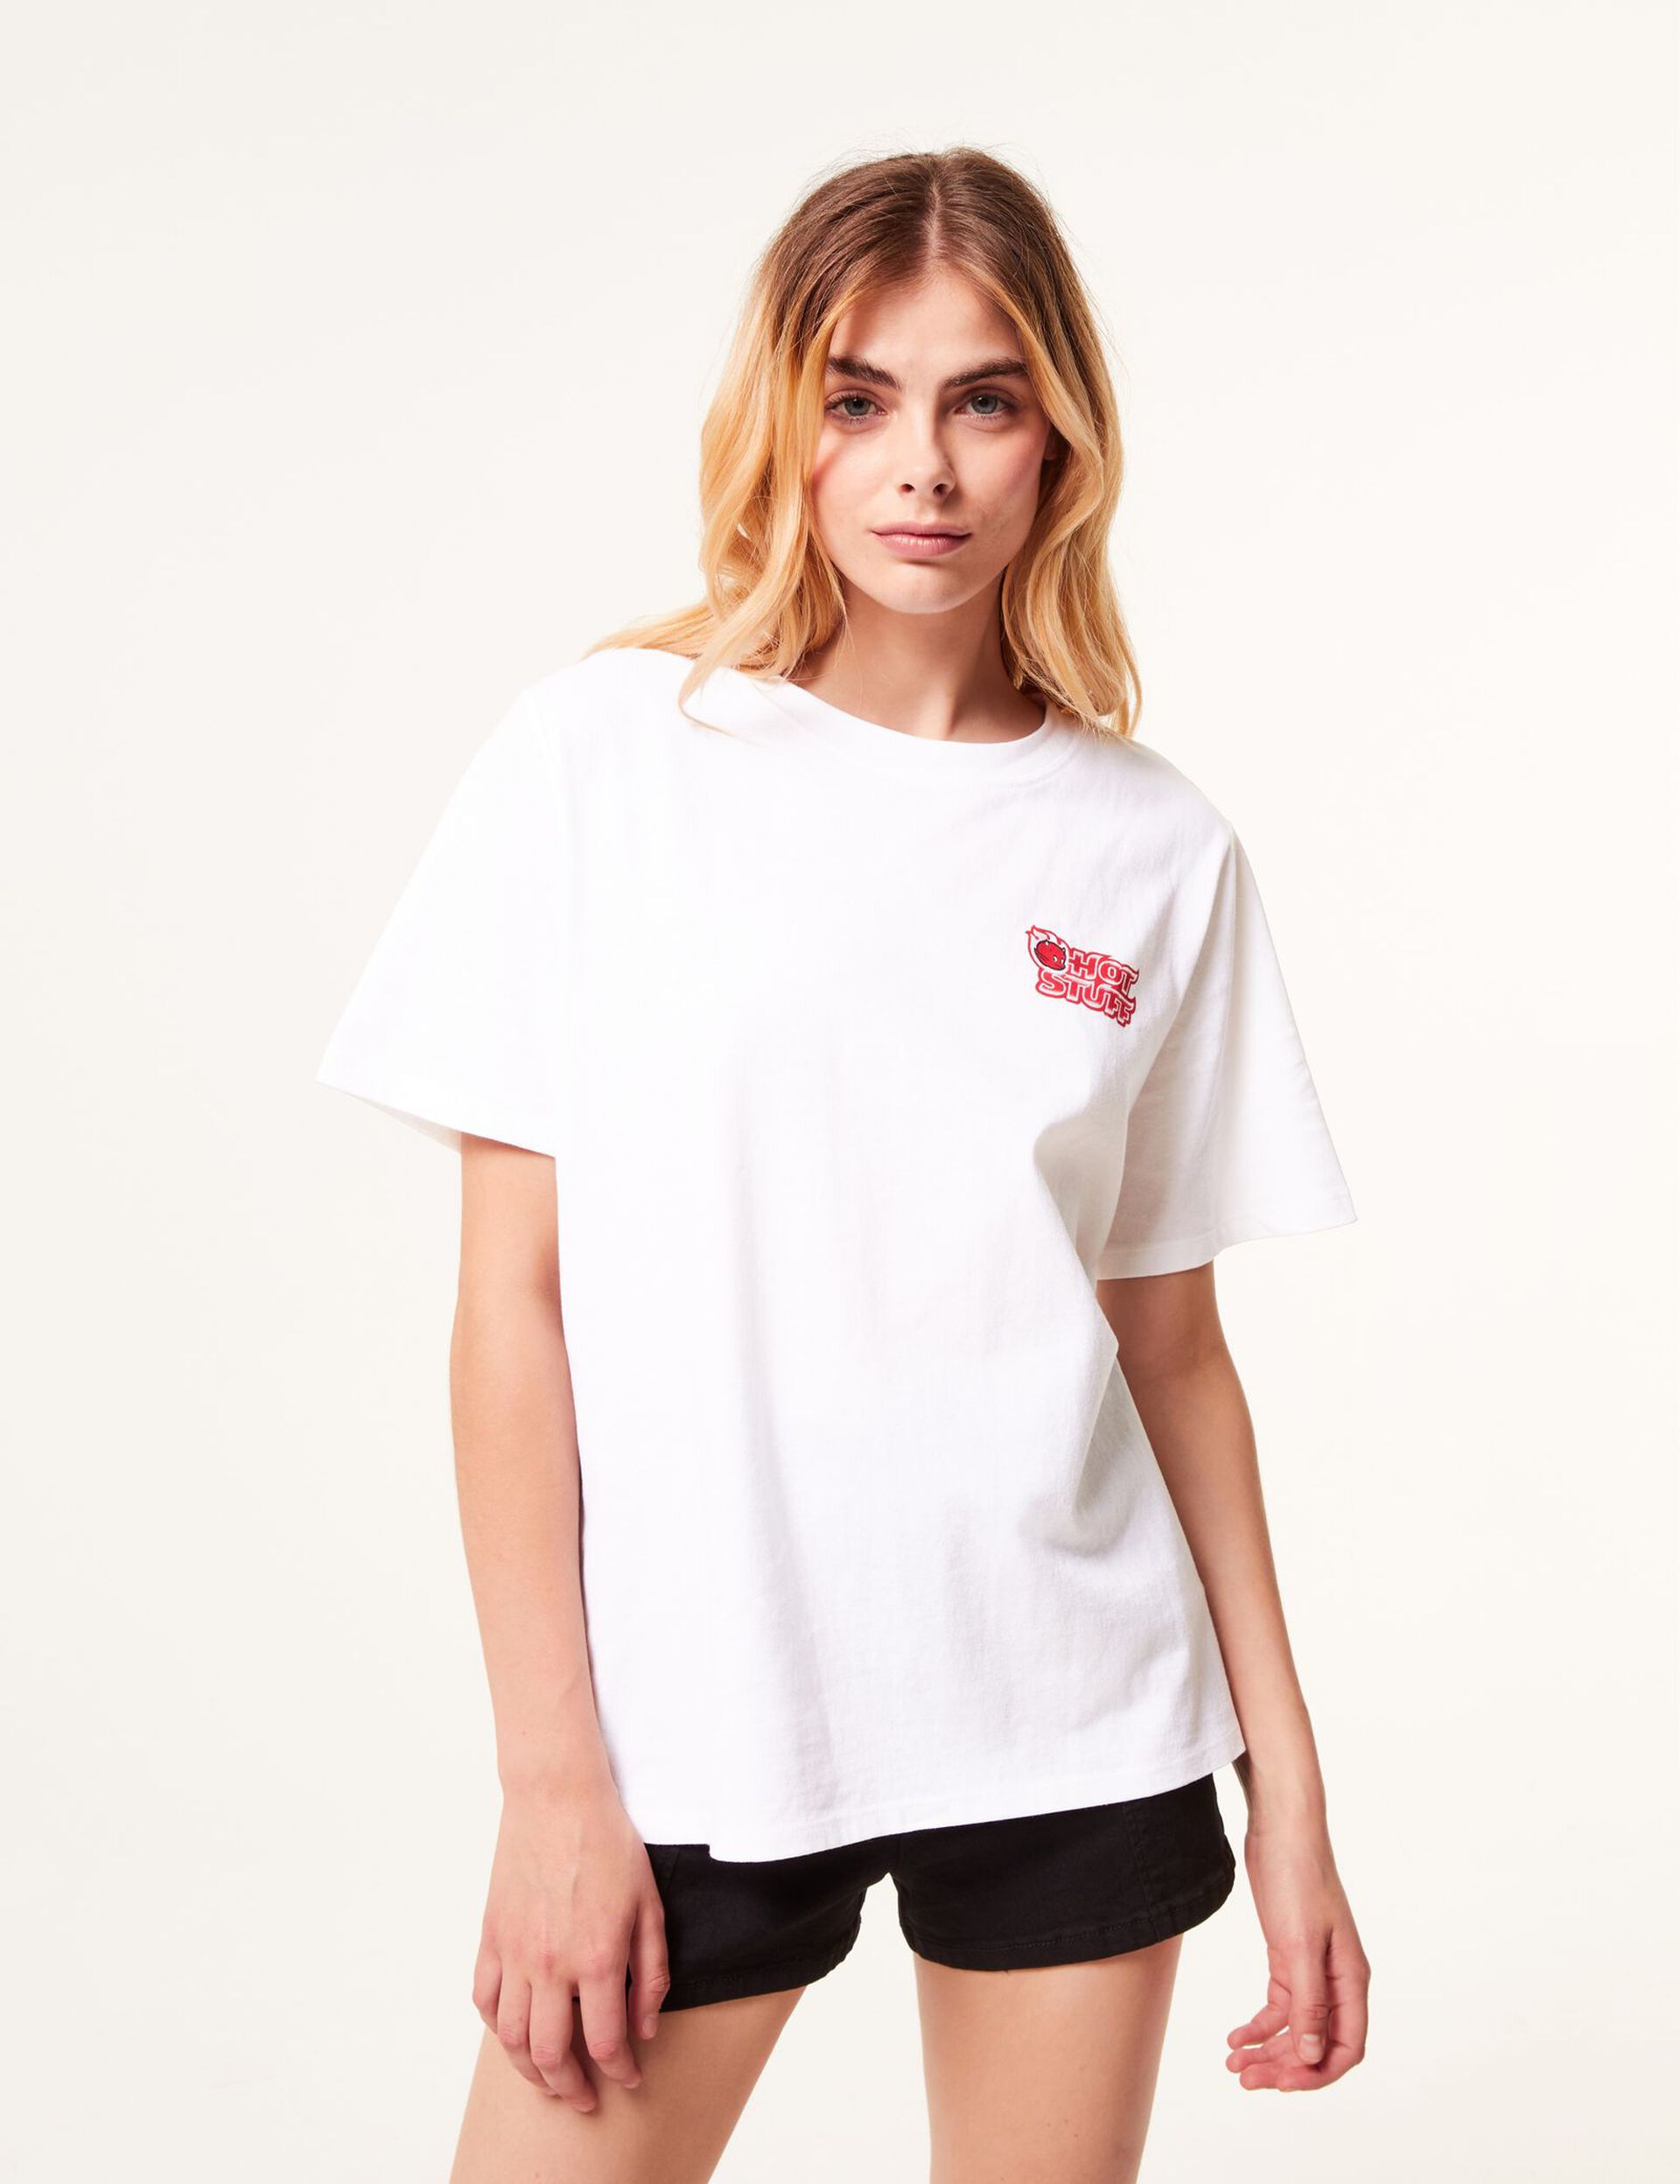 Tee-shirt blanc Hot Stuff Ado / Fille / Femme • Jennyfer